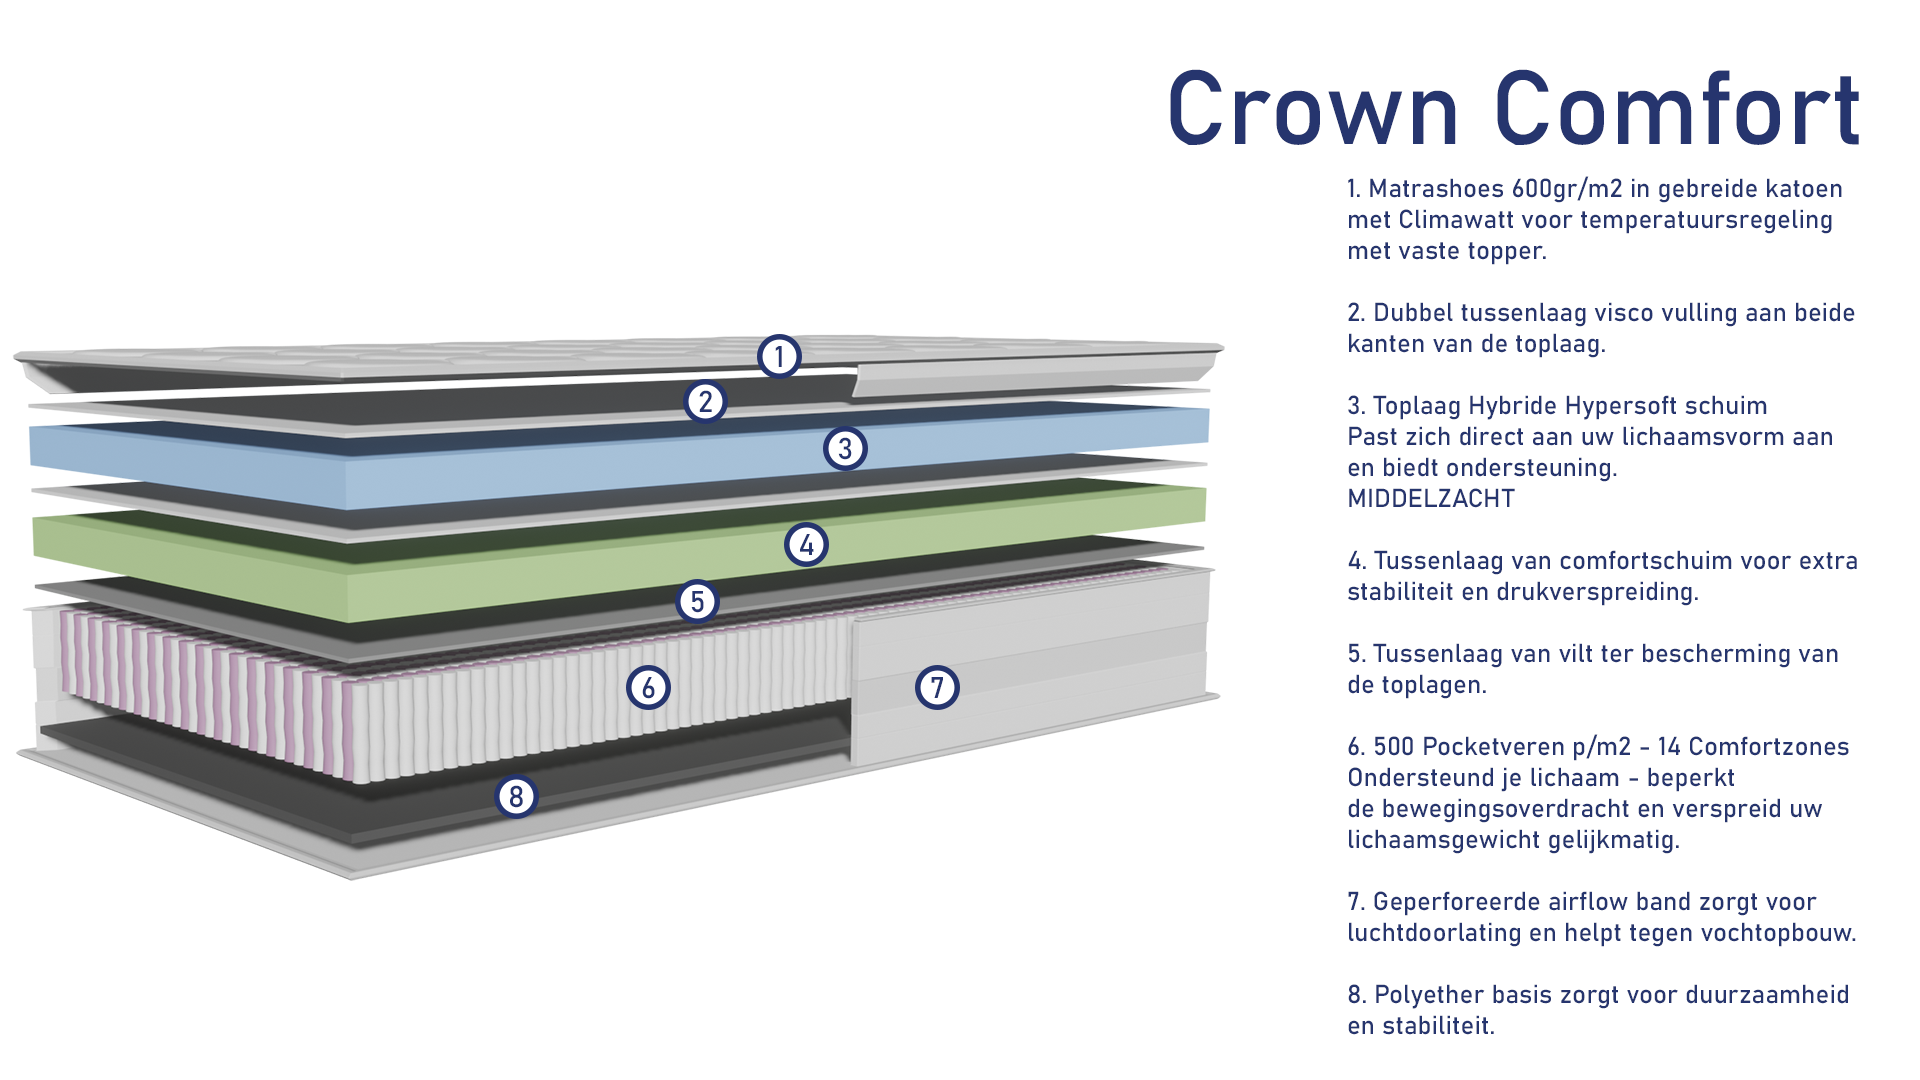 Crown Comfort - Uitleg.png